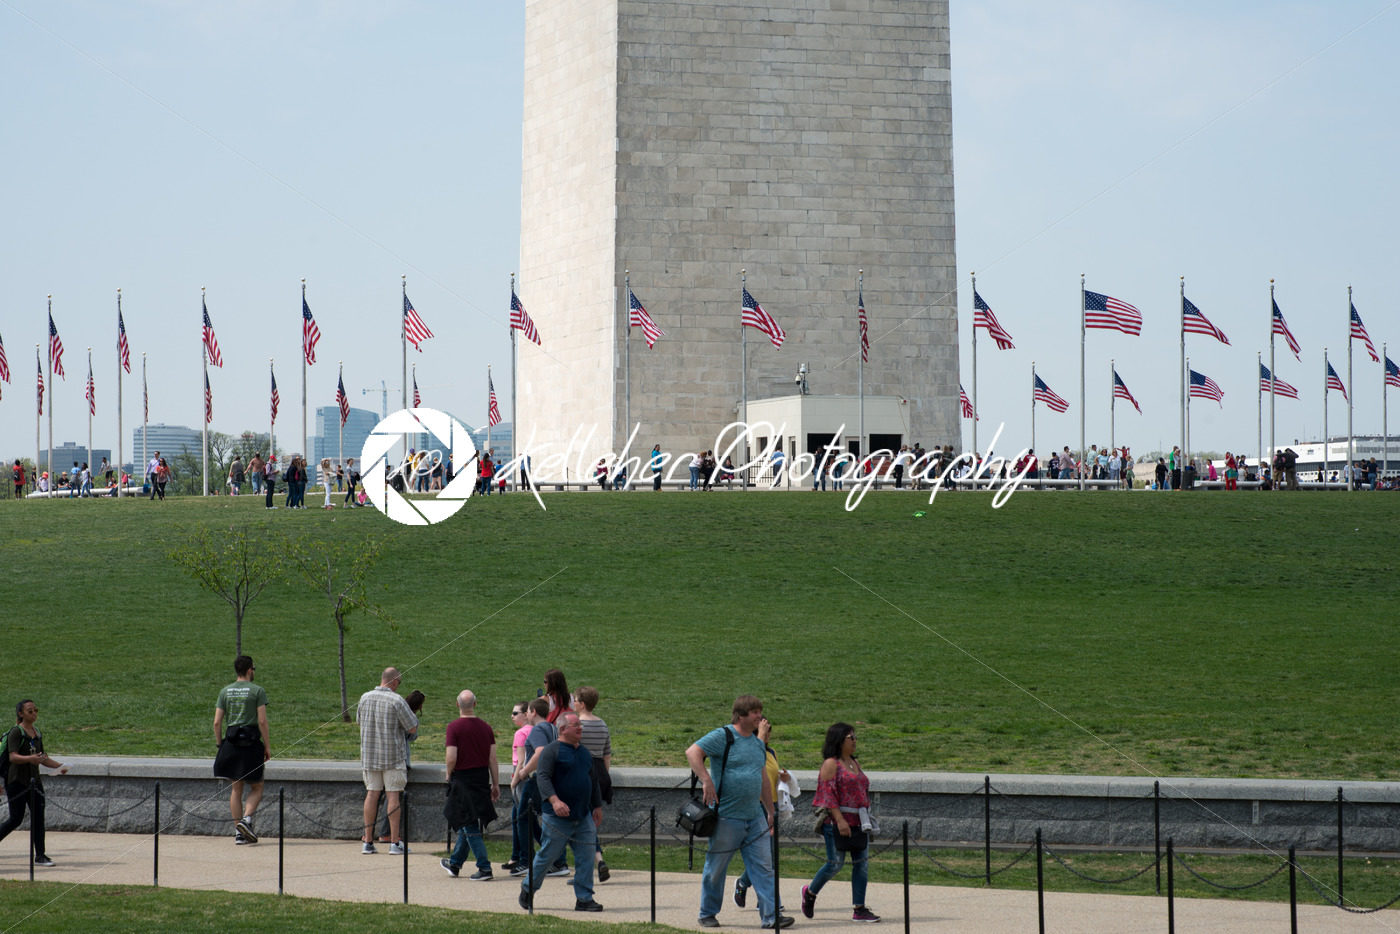 WASHINGTON, DISTRICT OF COLUMBIA – APRIL 14: View of the Washington Monument on April 14, 2017 - Kelleher Photography Store